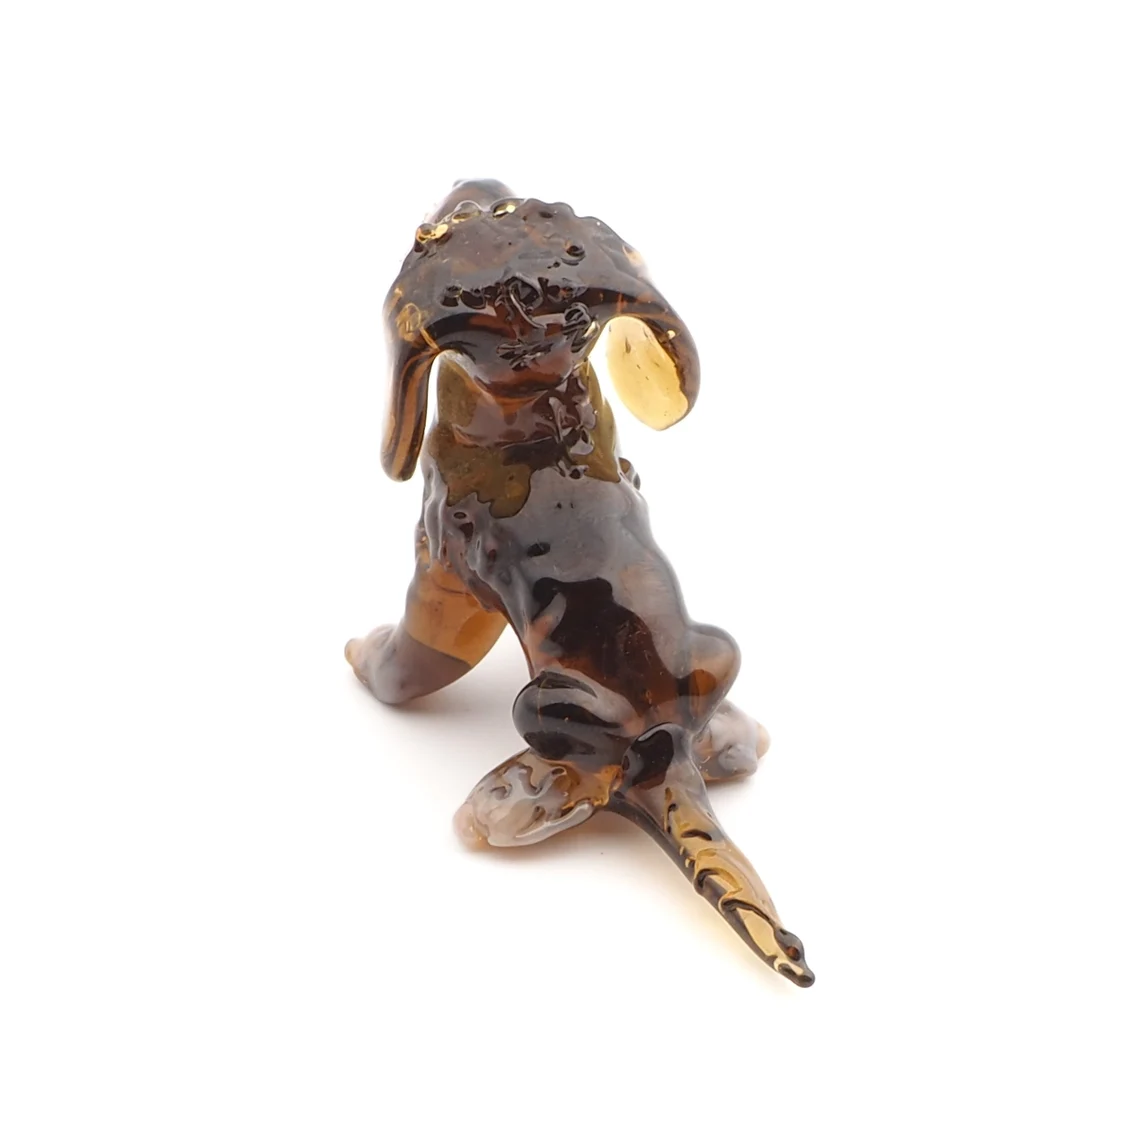 Czech lampwork glass miniature Schnauzer dog figurine ornament